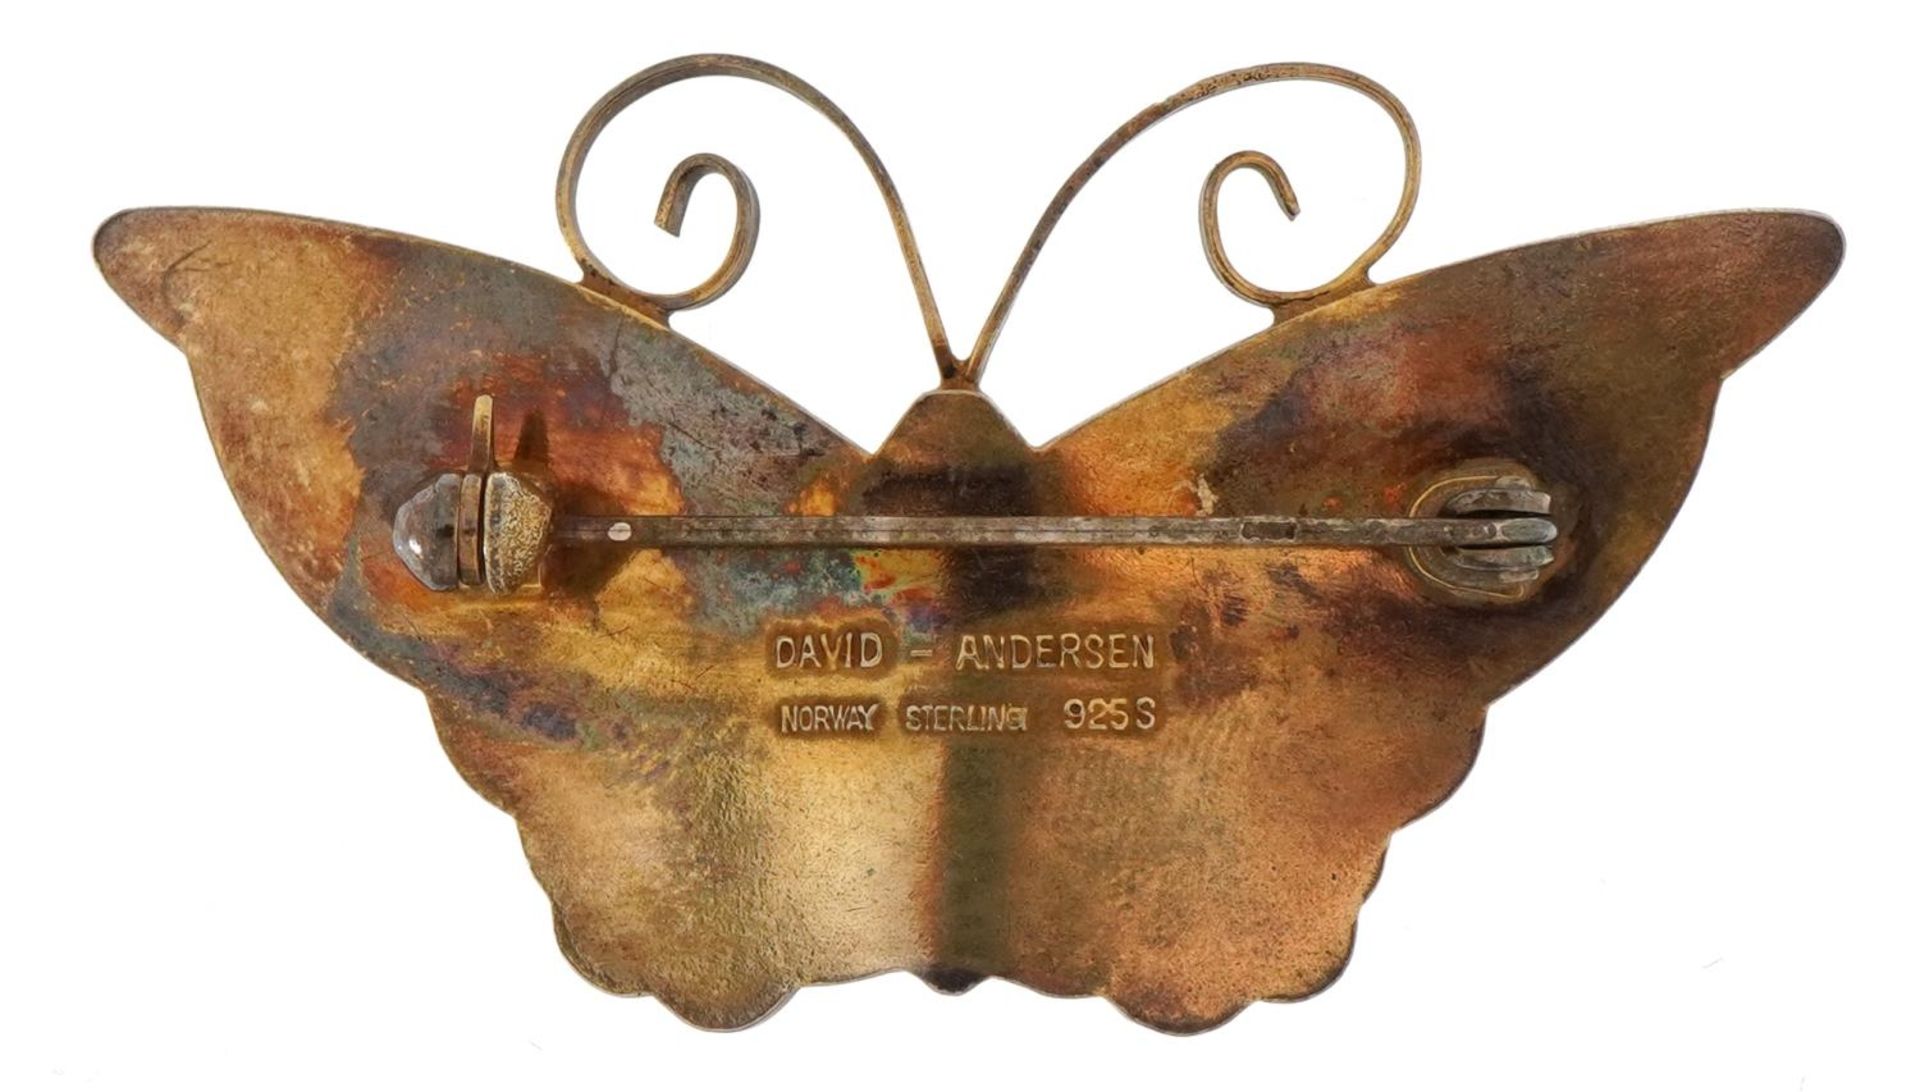 David Andersen, Norwegian 925S silver and enamel butterfly brooch, 5.4cm wide, 10.1g - Image 2 of 3